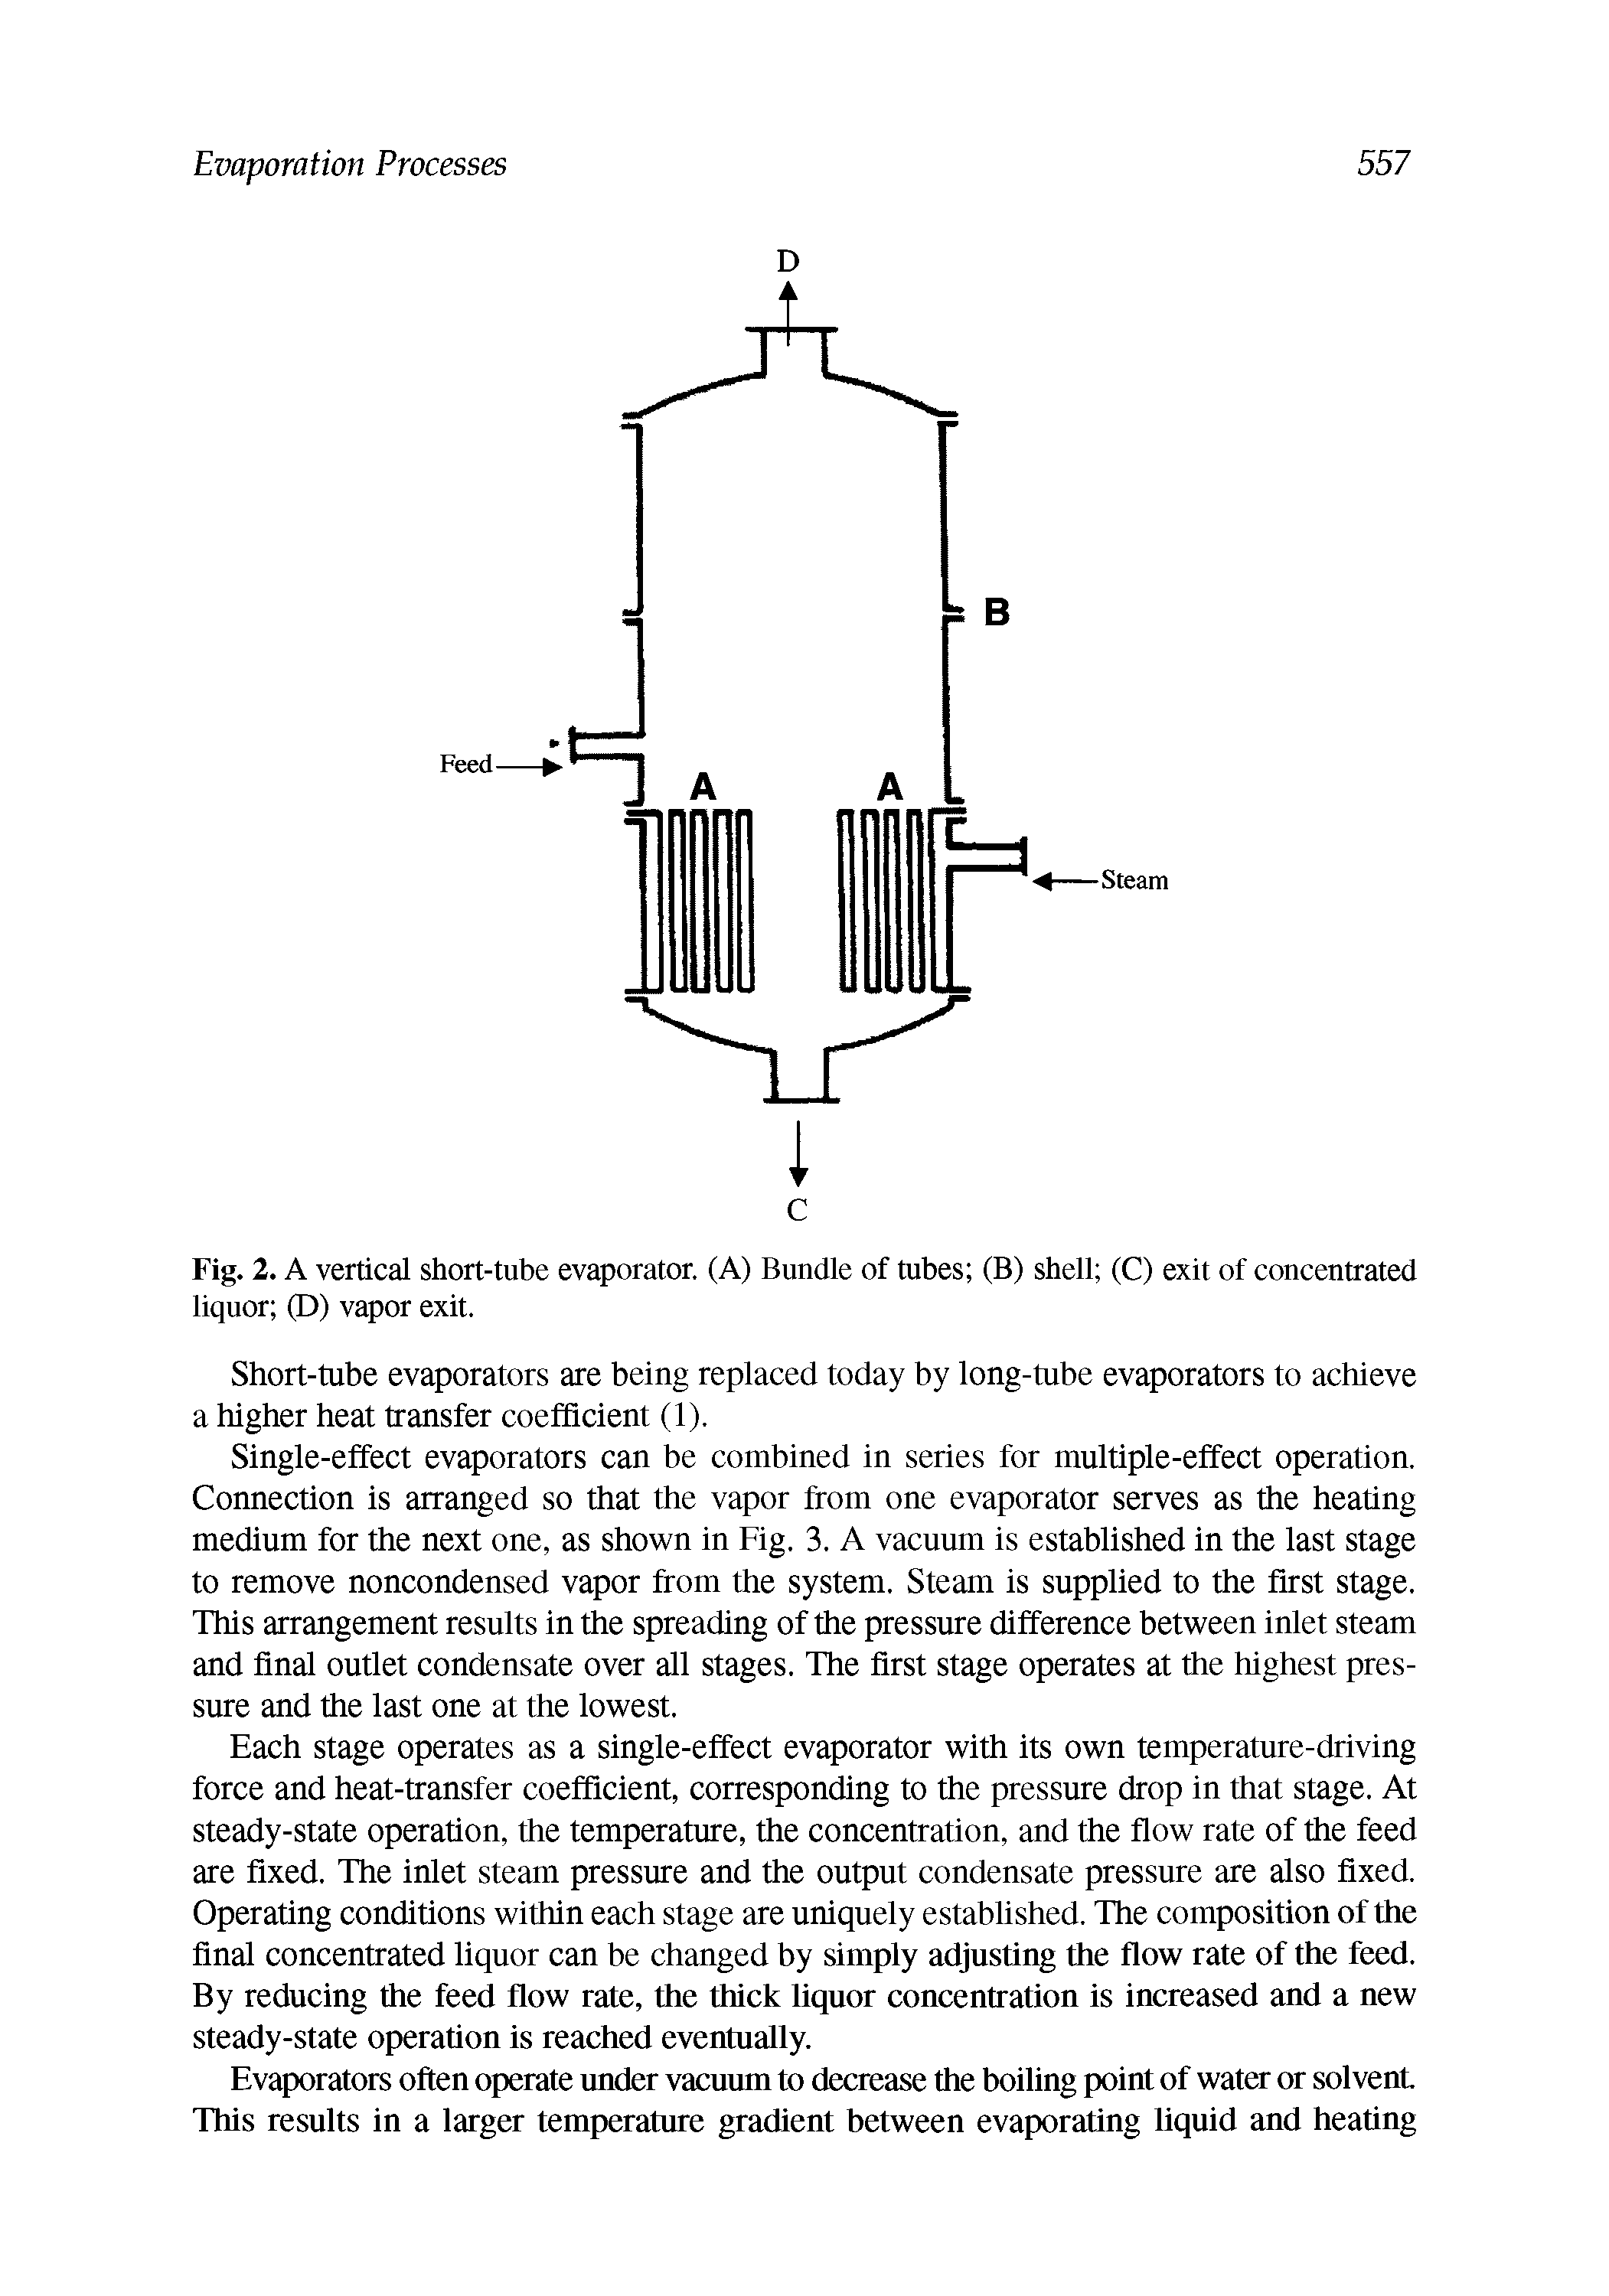 Fig. 2. A vertical short-tube evaporator. (A) Bundle of tubes (B) shell (C) exit of concentrated liquor (D) vapor exit.